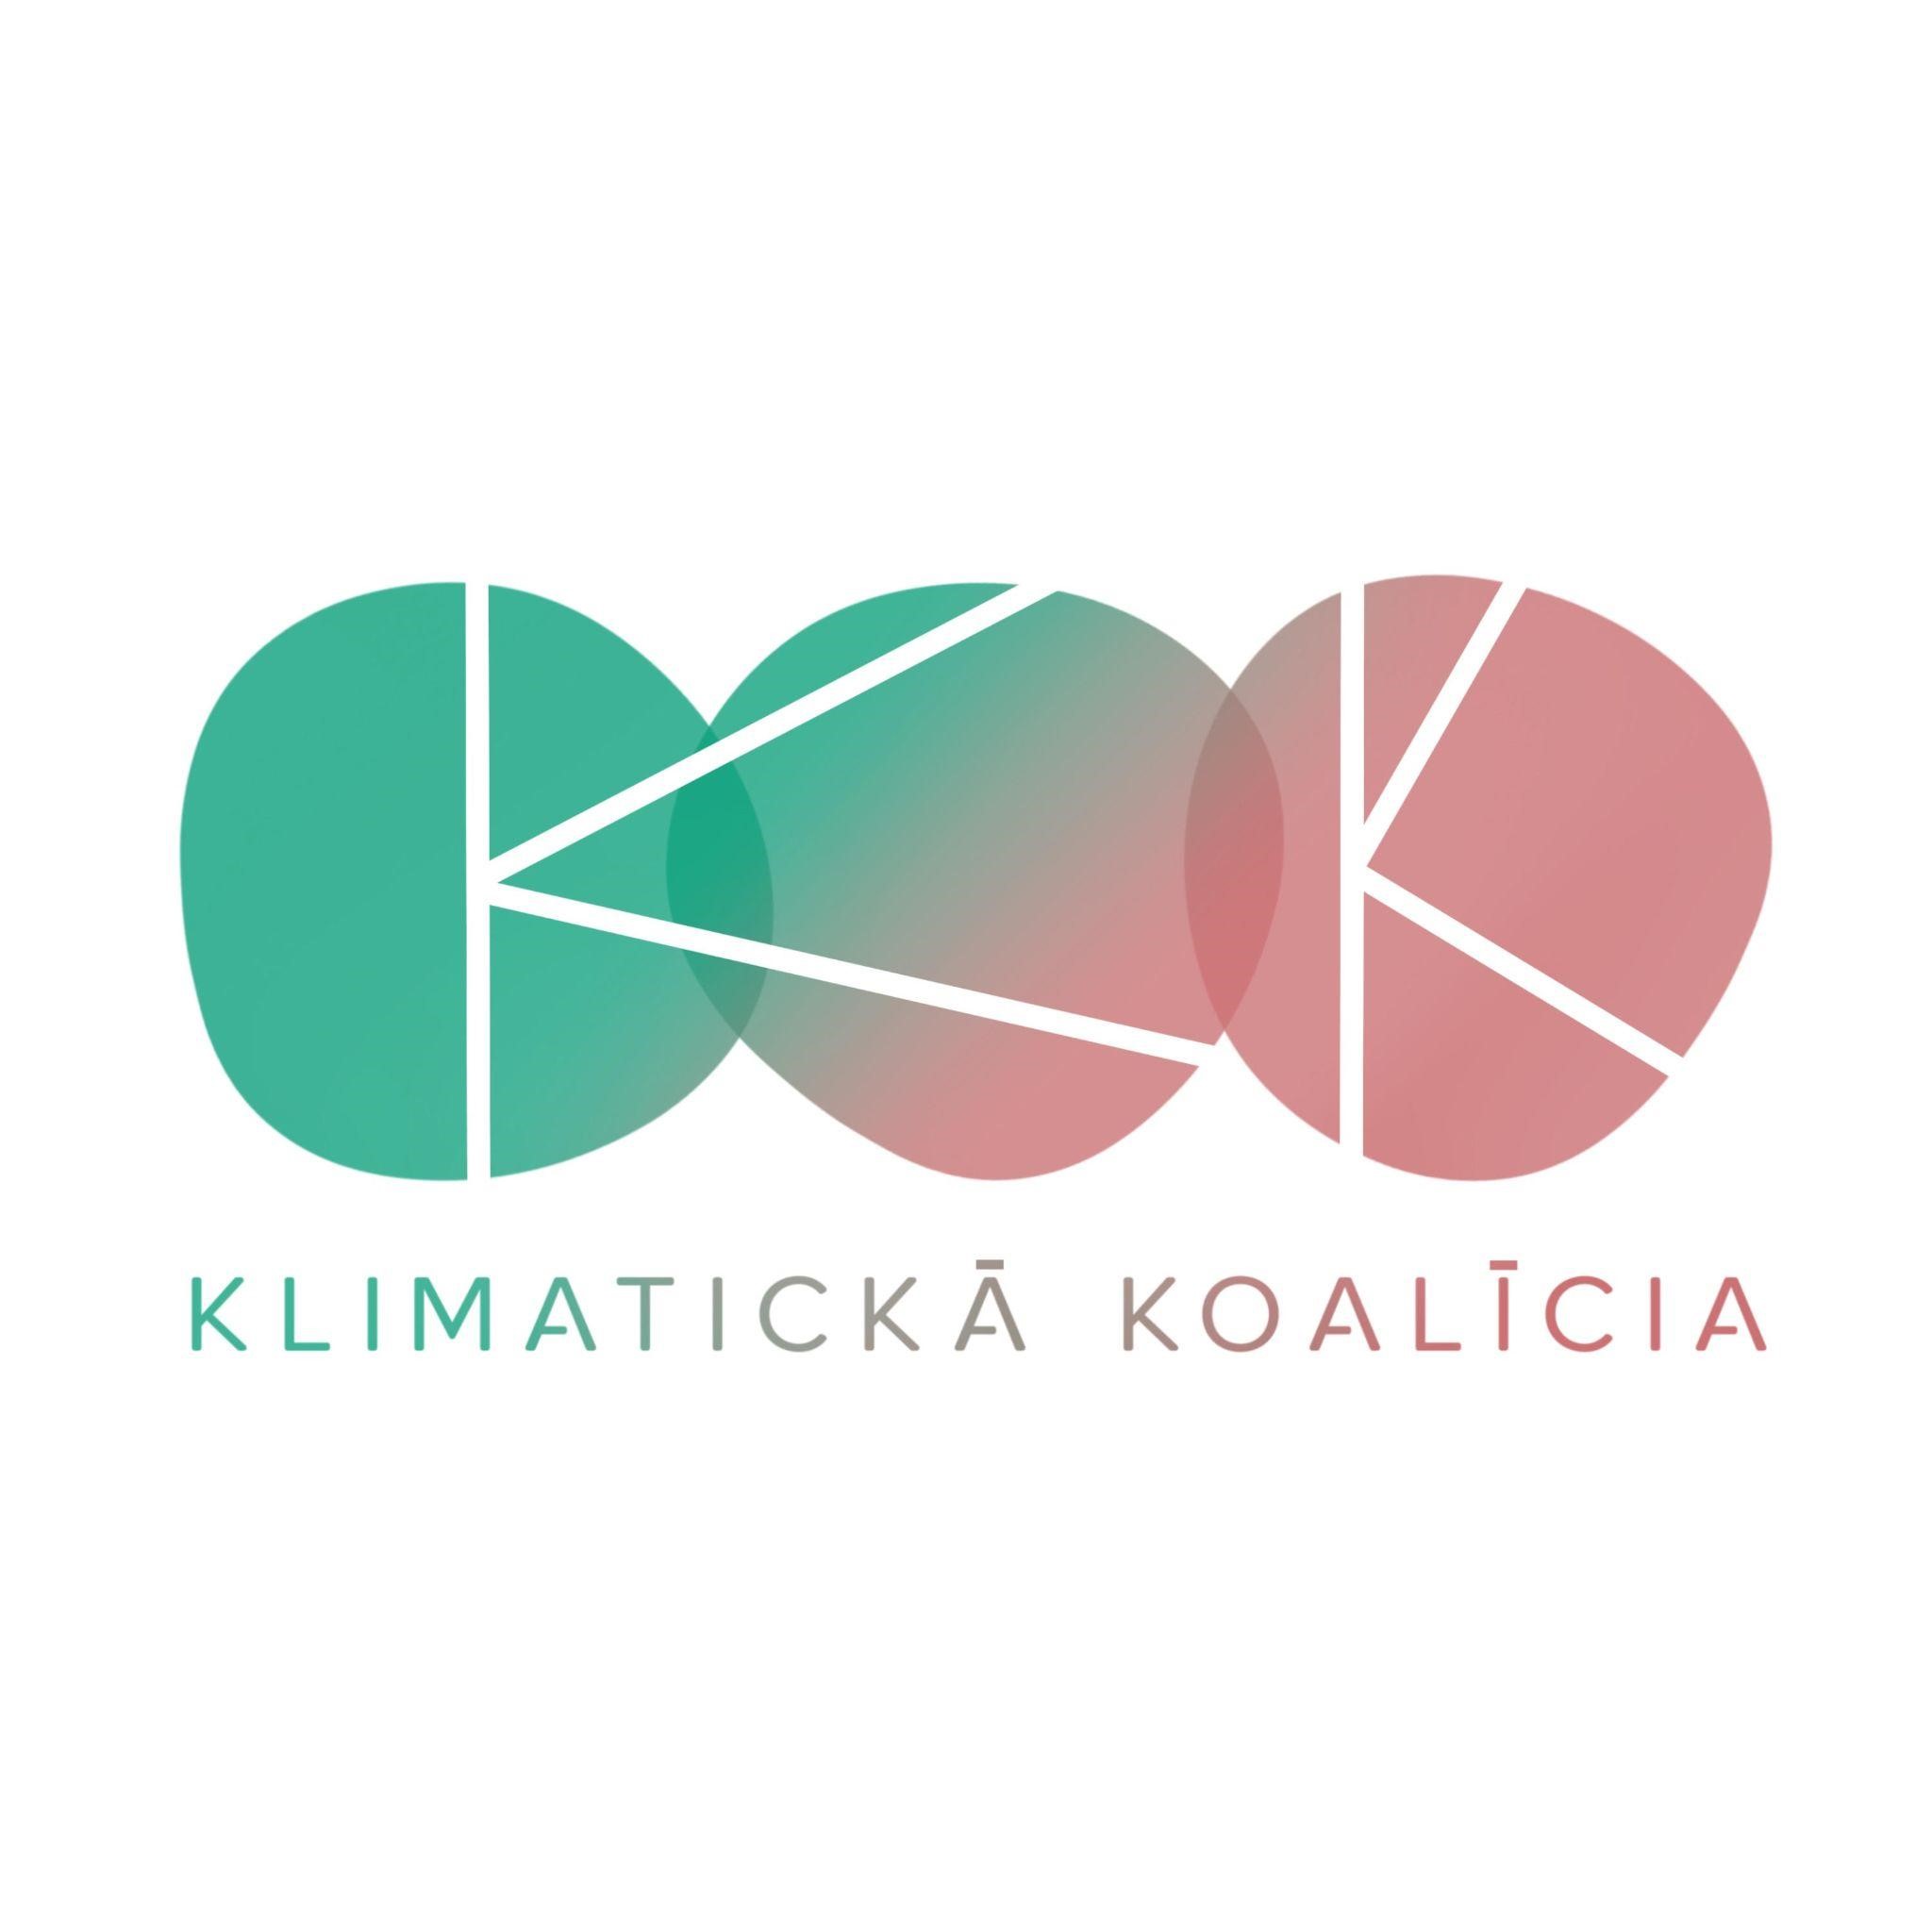 Klimaticka Koalicia logo